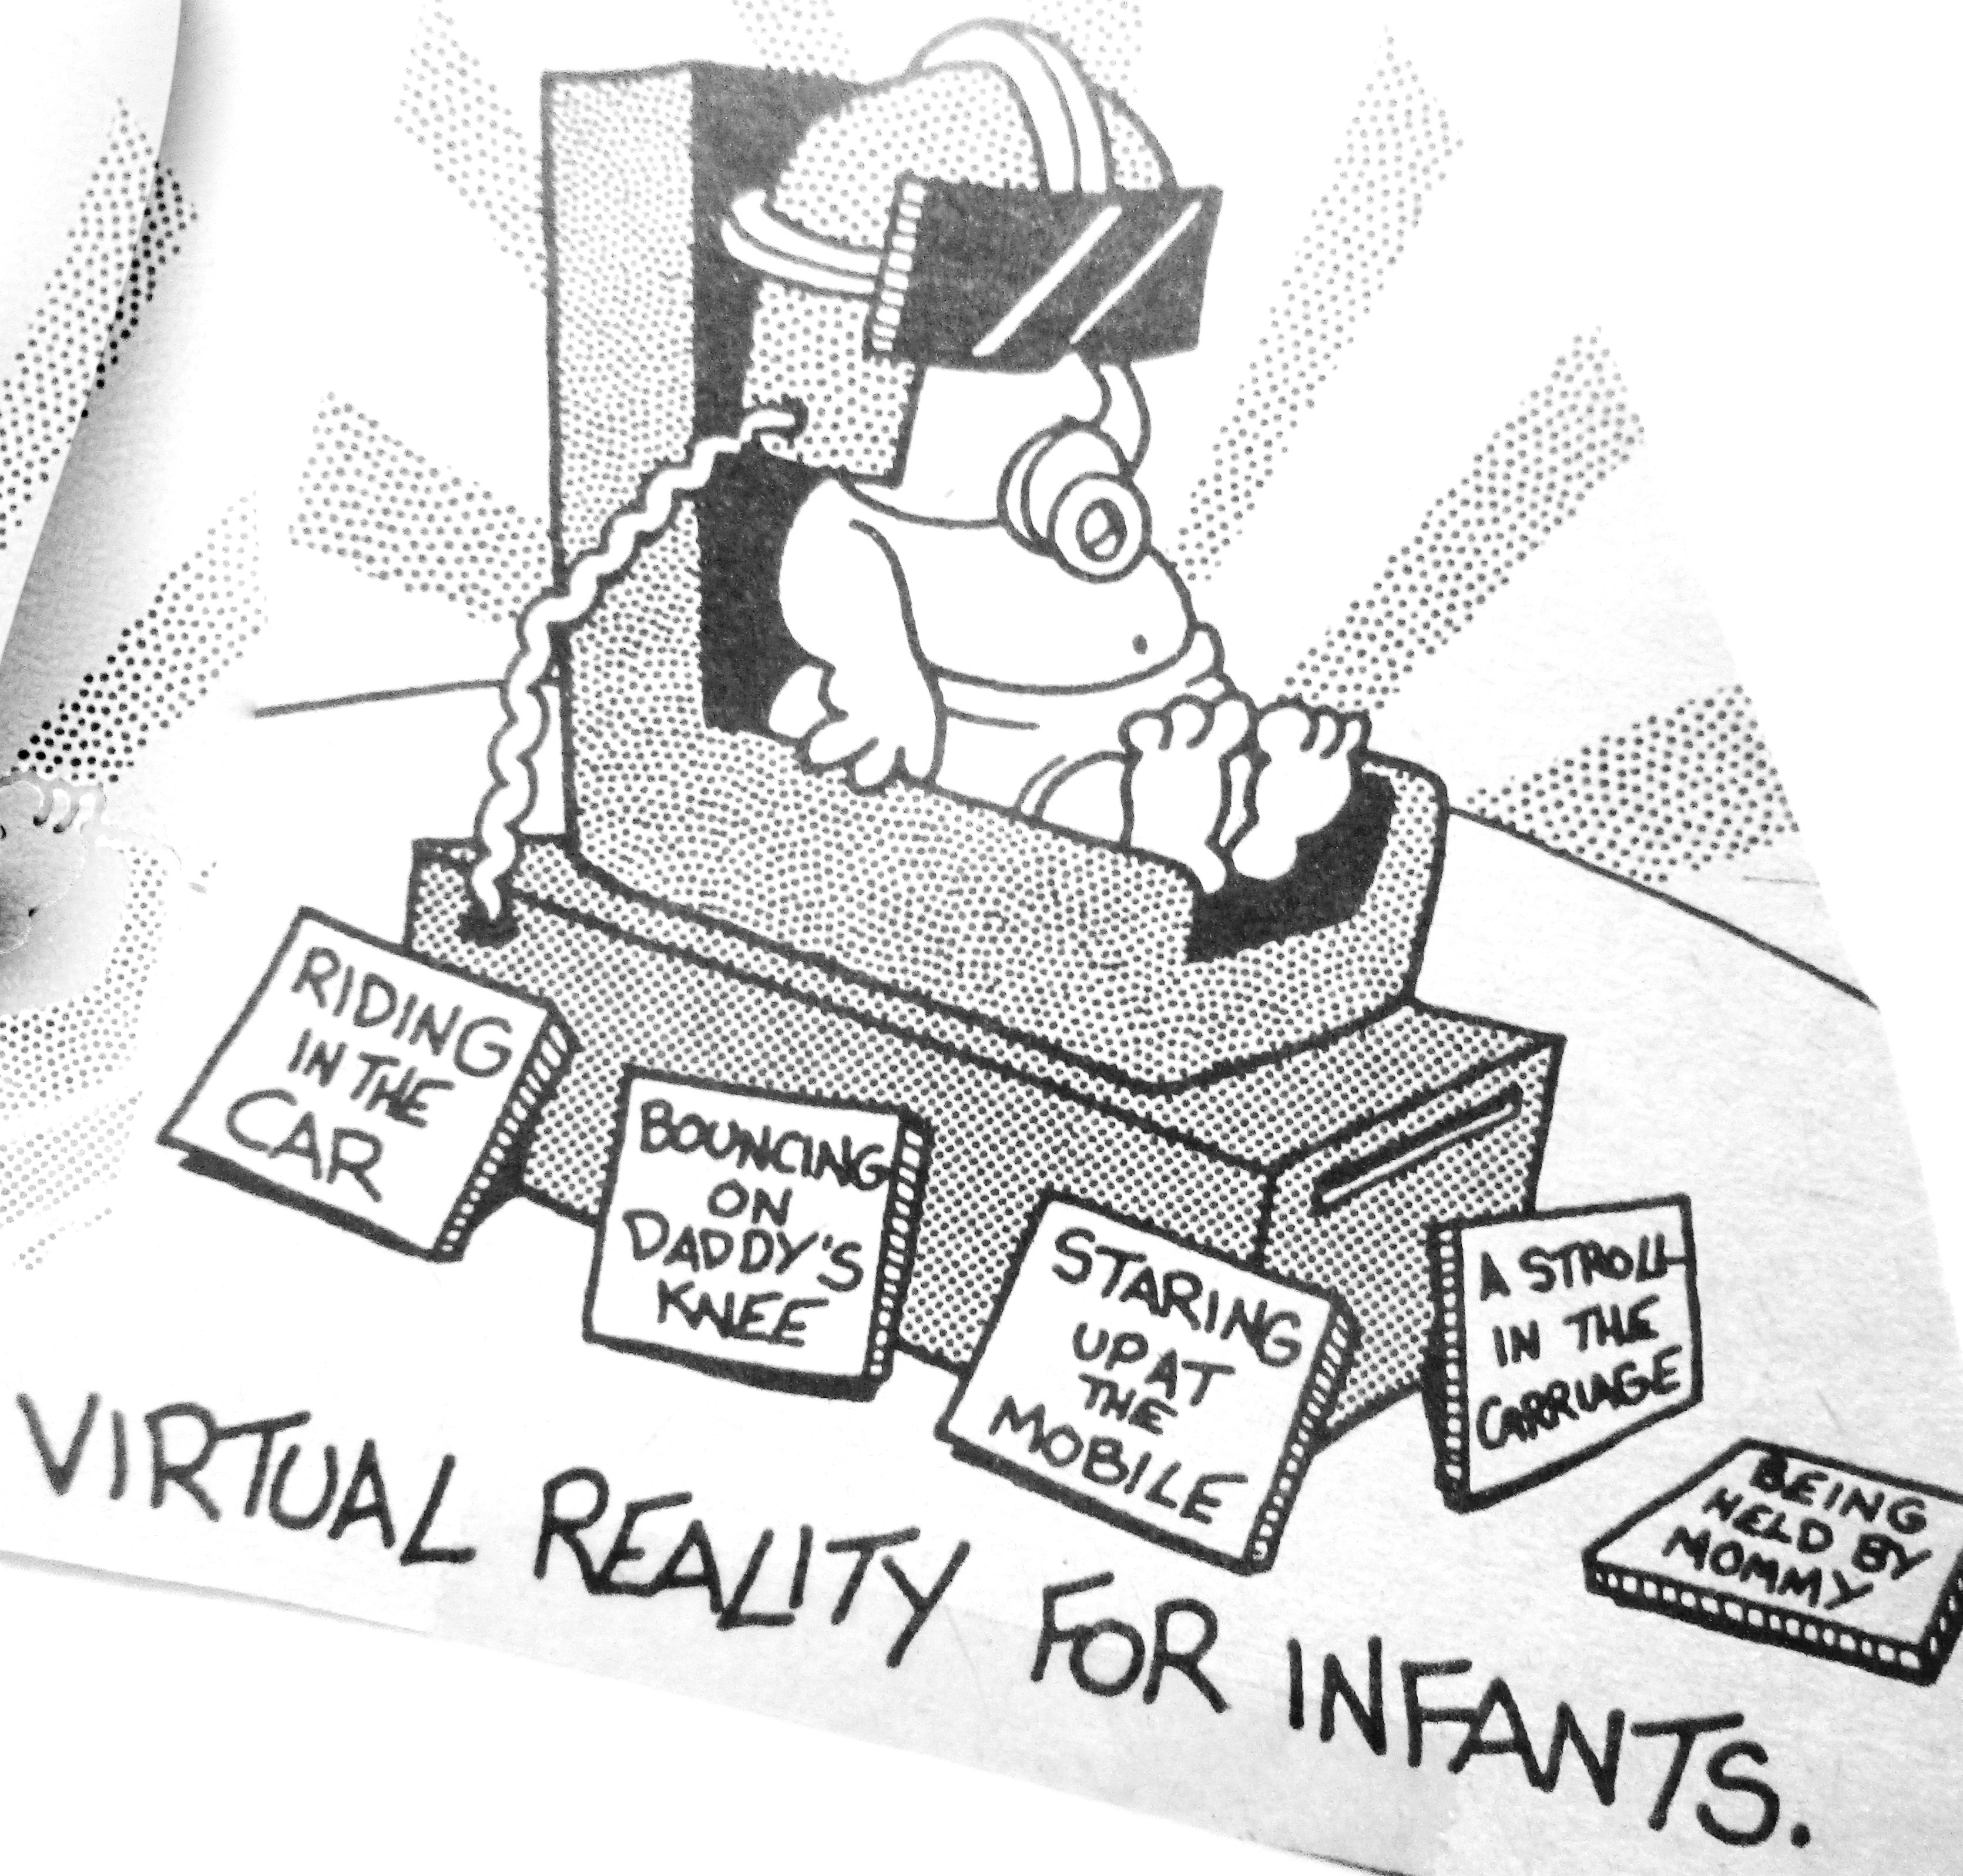 Cartoon - Virtual Reality For Infants - Antarctica Journal